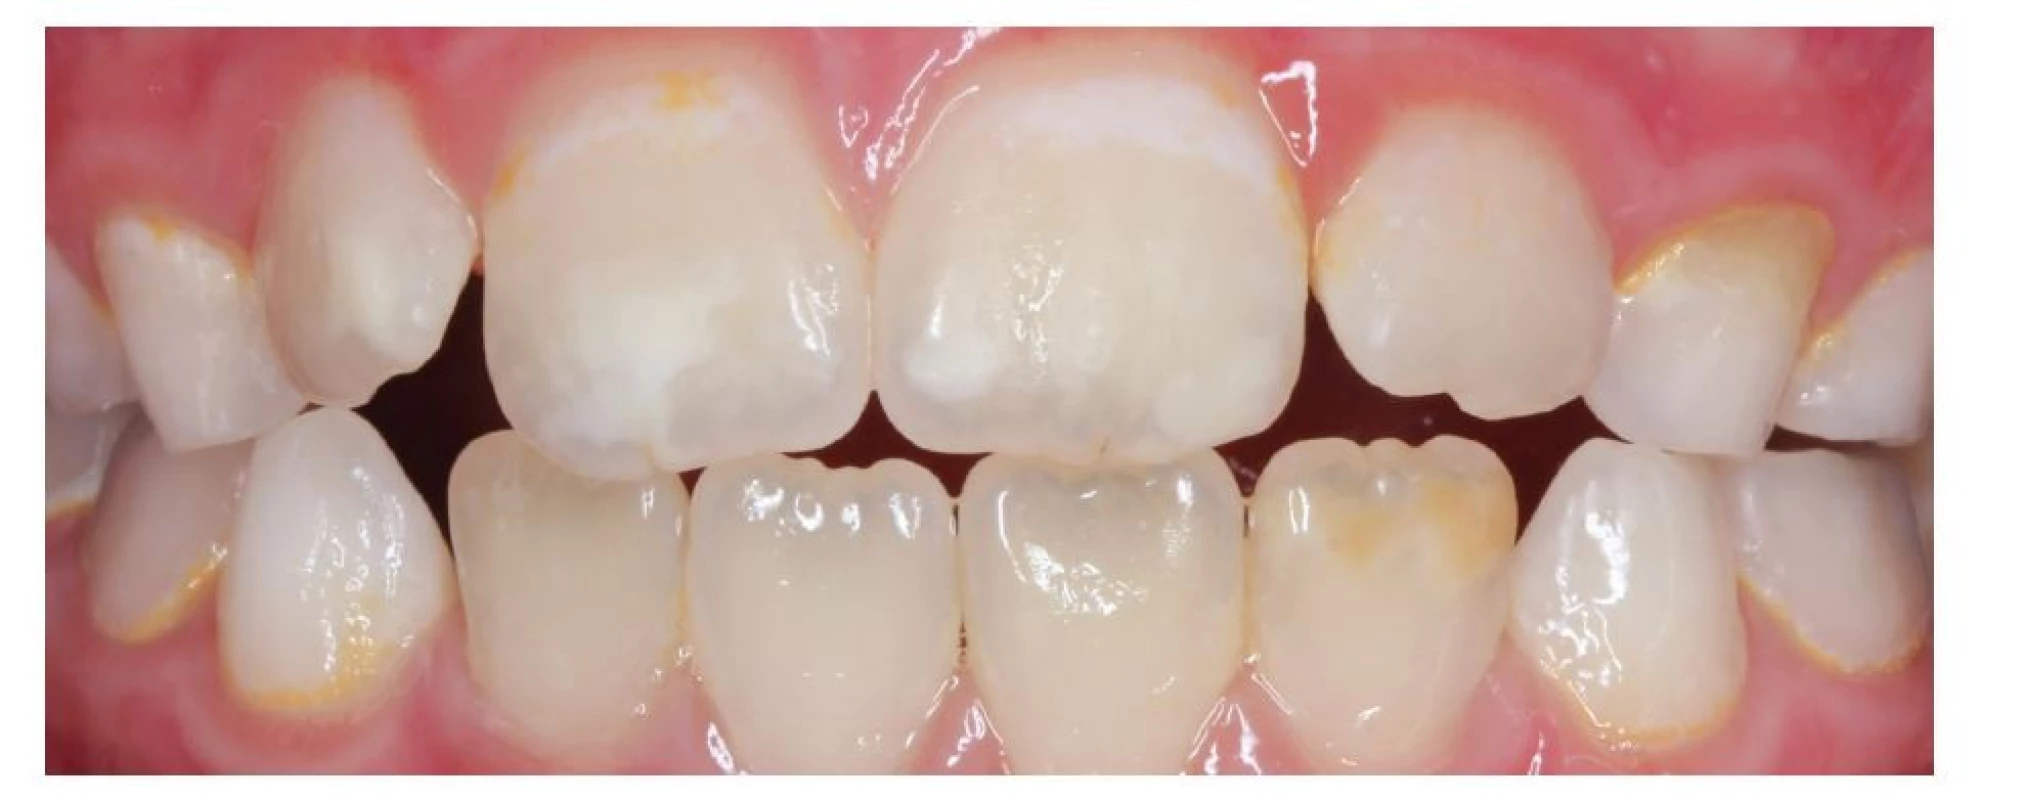 Bílé opacity na zubech 12,
11, 21 a hnědá opacita na
zubu 32<br>
Fig. 1
White opacities on the teeth 12,
11, 21, and a brown opacity on
the tooth 32